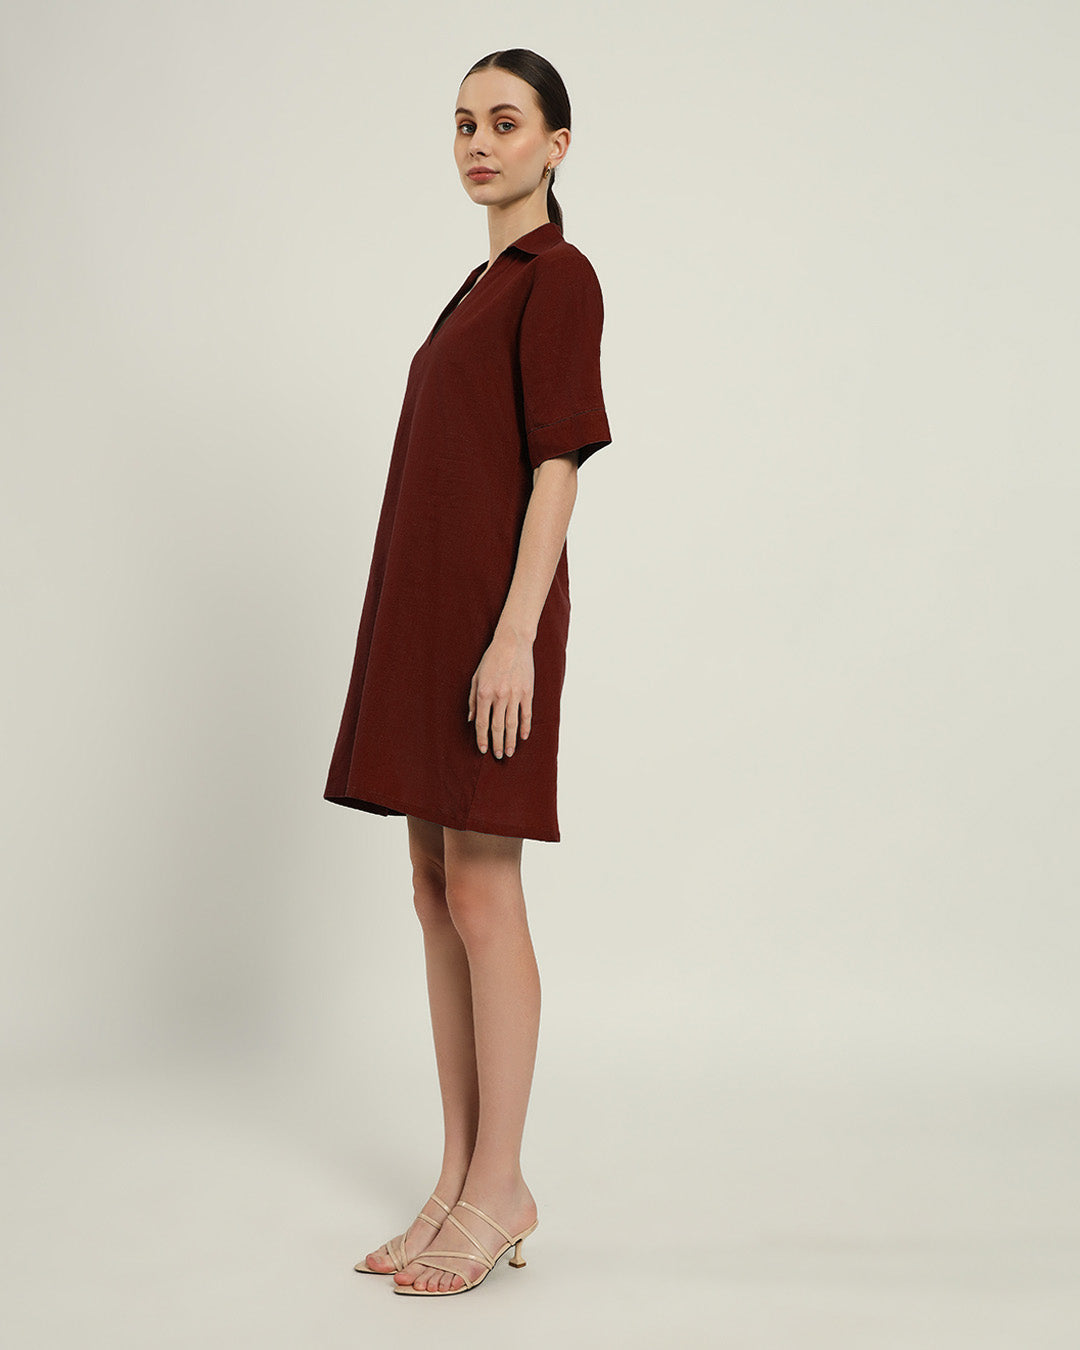 The Ermont Rouge Cotton Dress